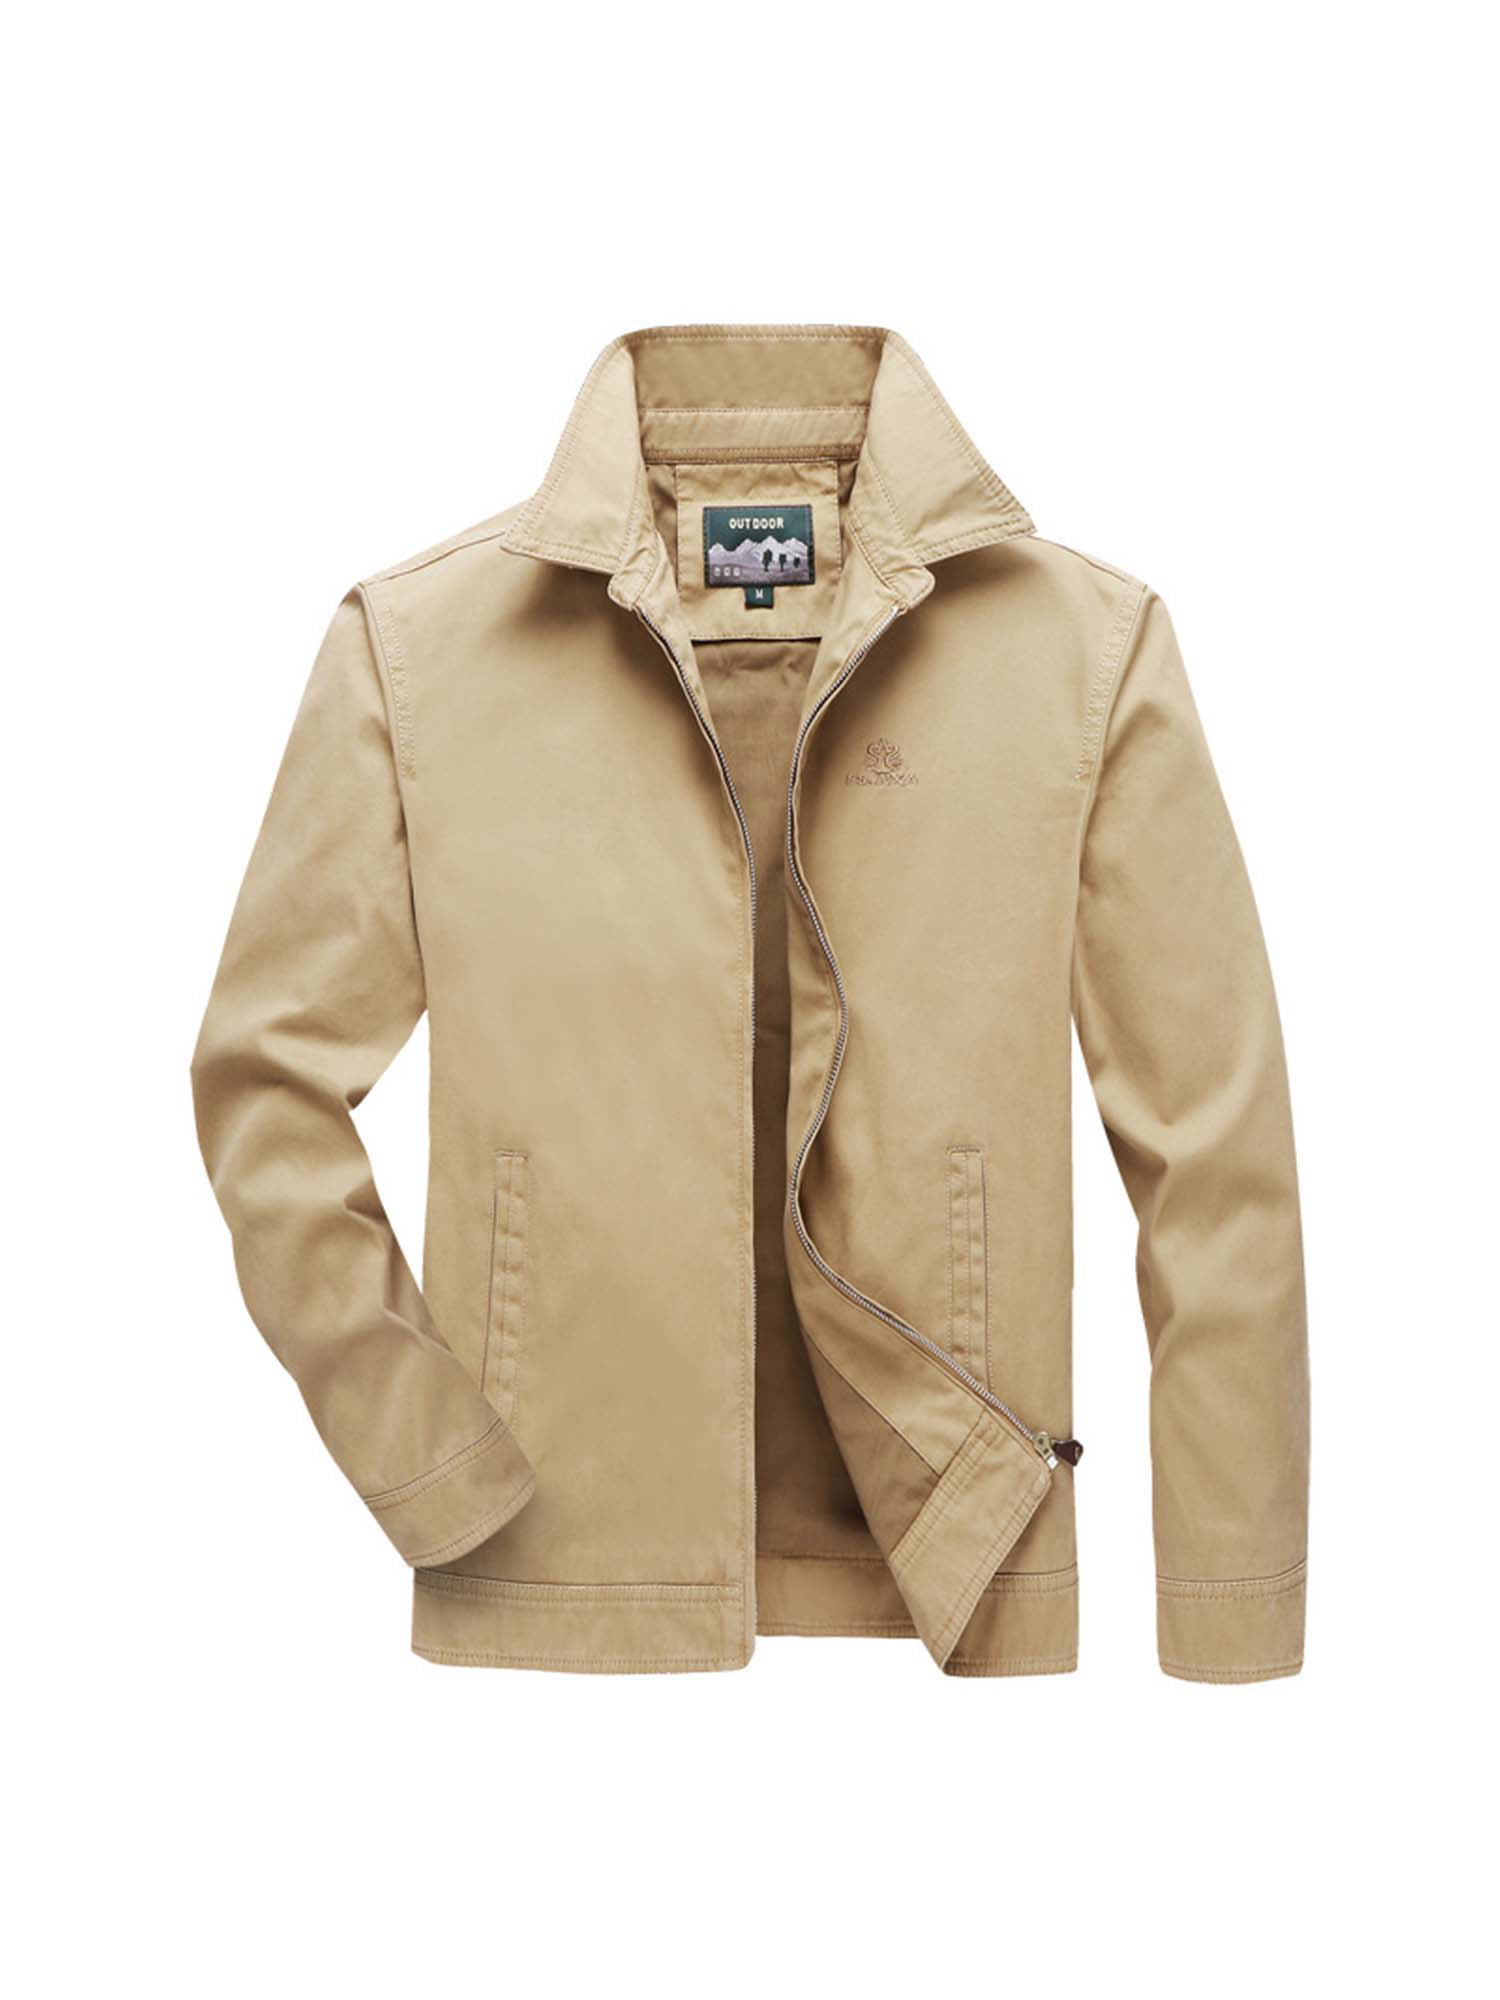 YUNY Mens Hoode Pocket Winter Warm Loose-Fit Overcoat Outerwear Grey 3XL